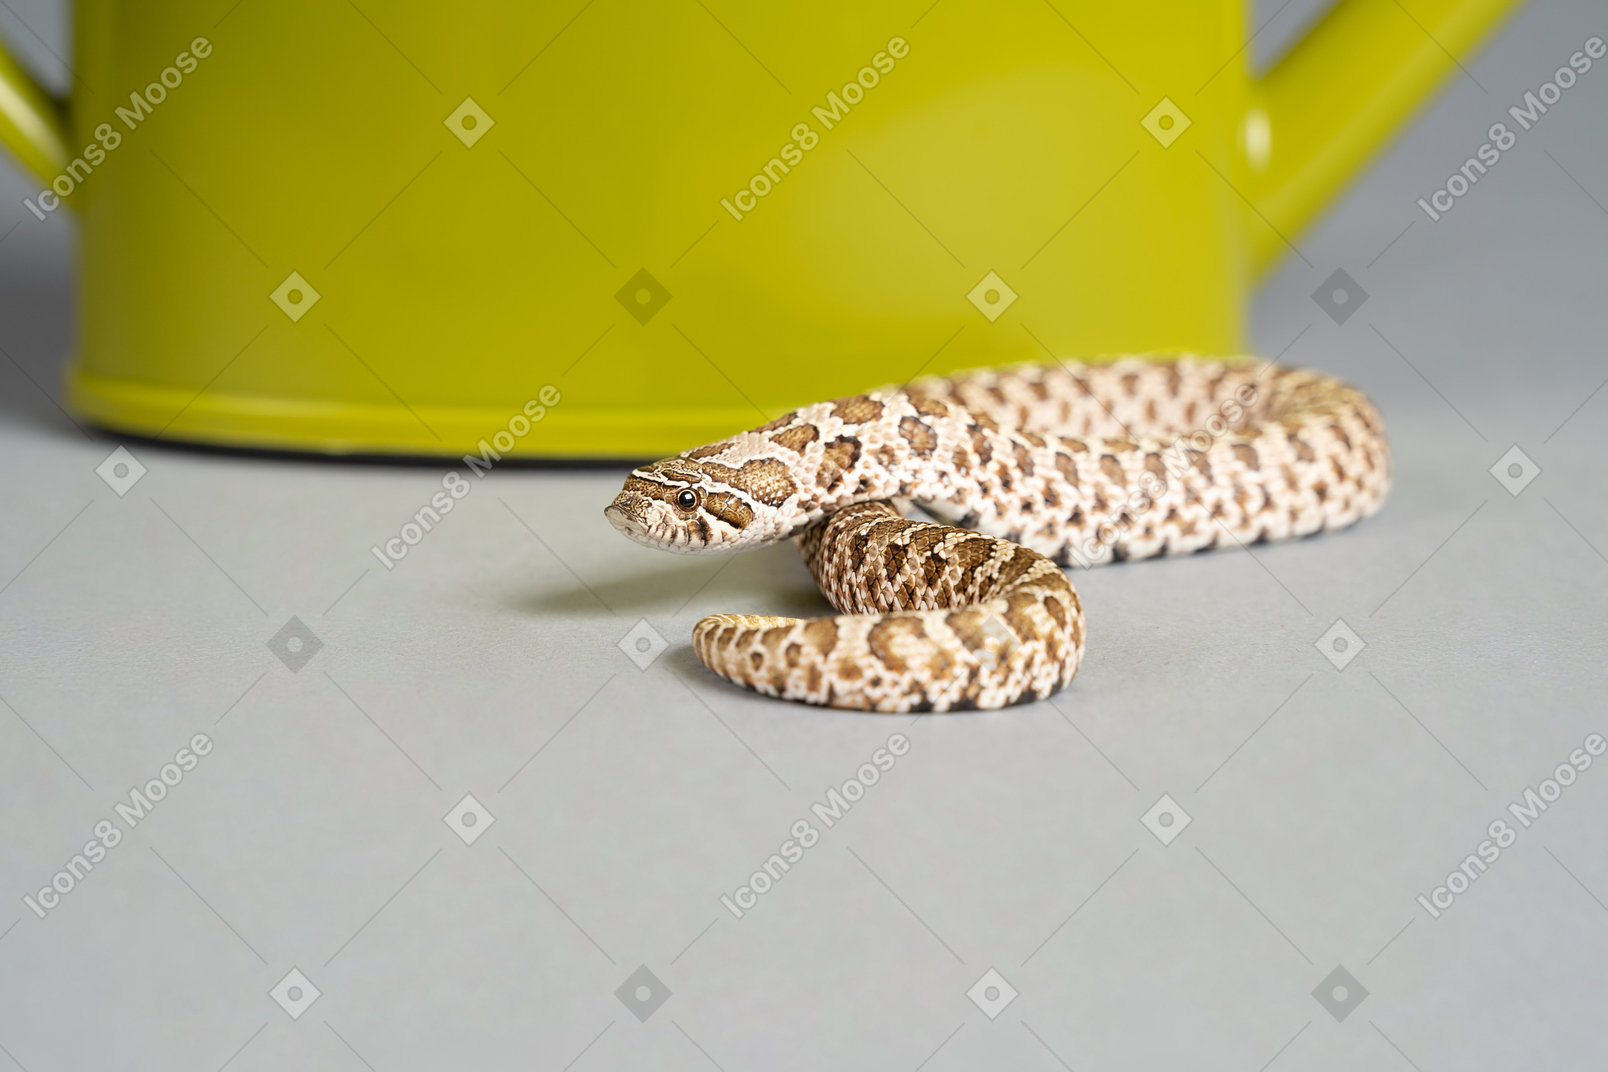 A little corn snake near a watering can